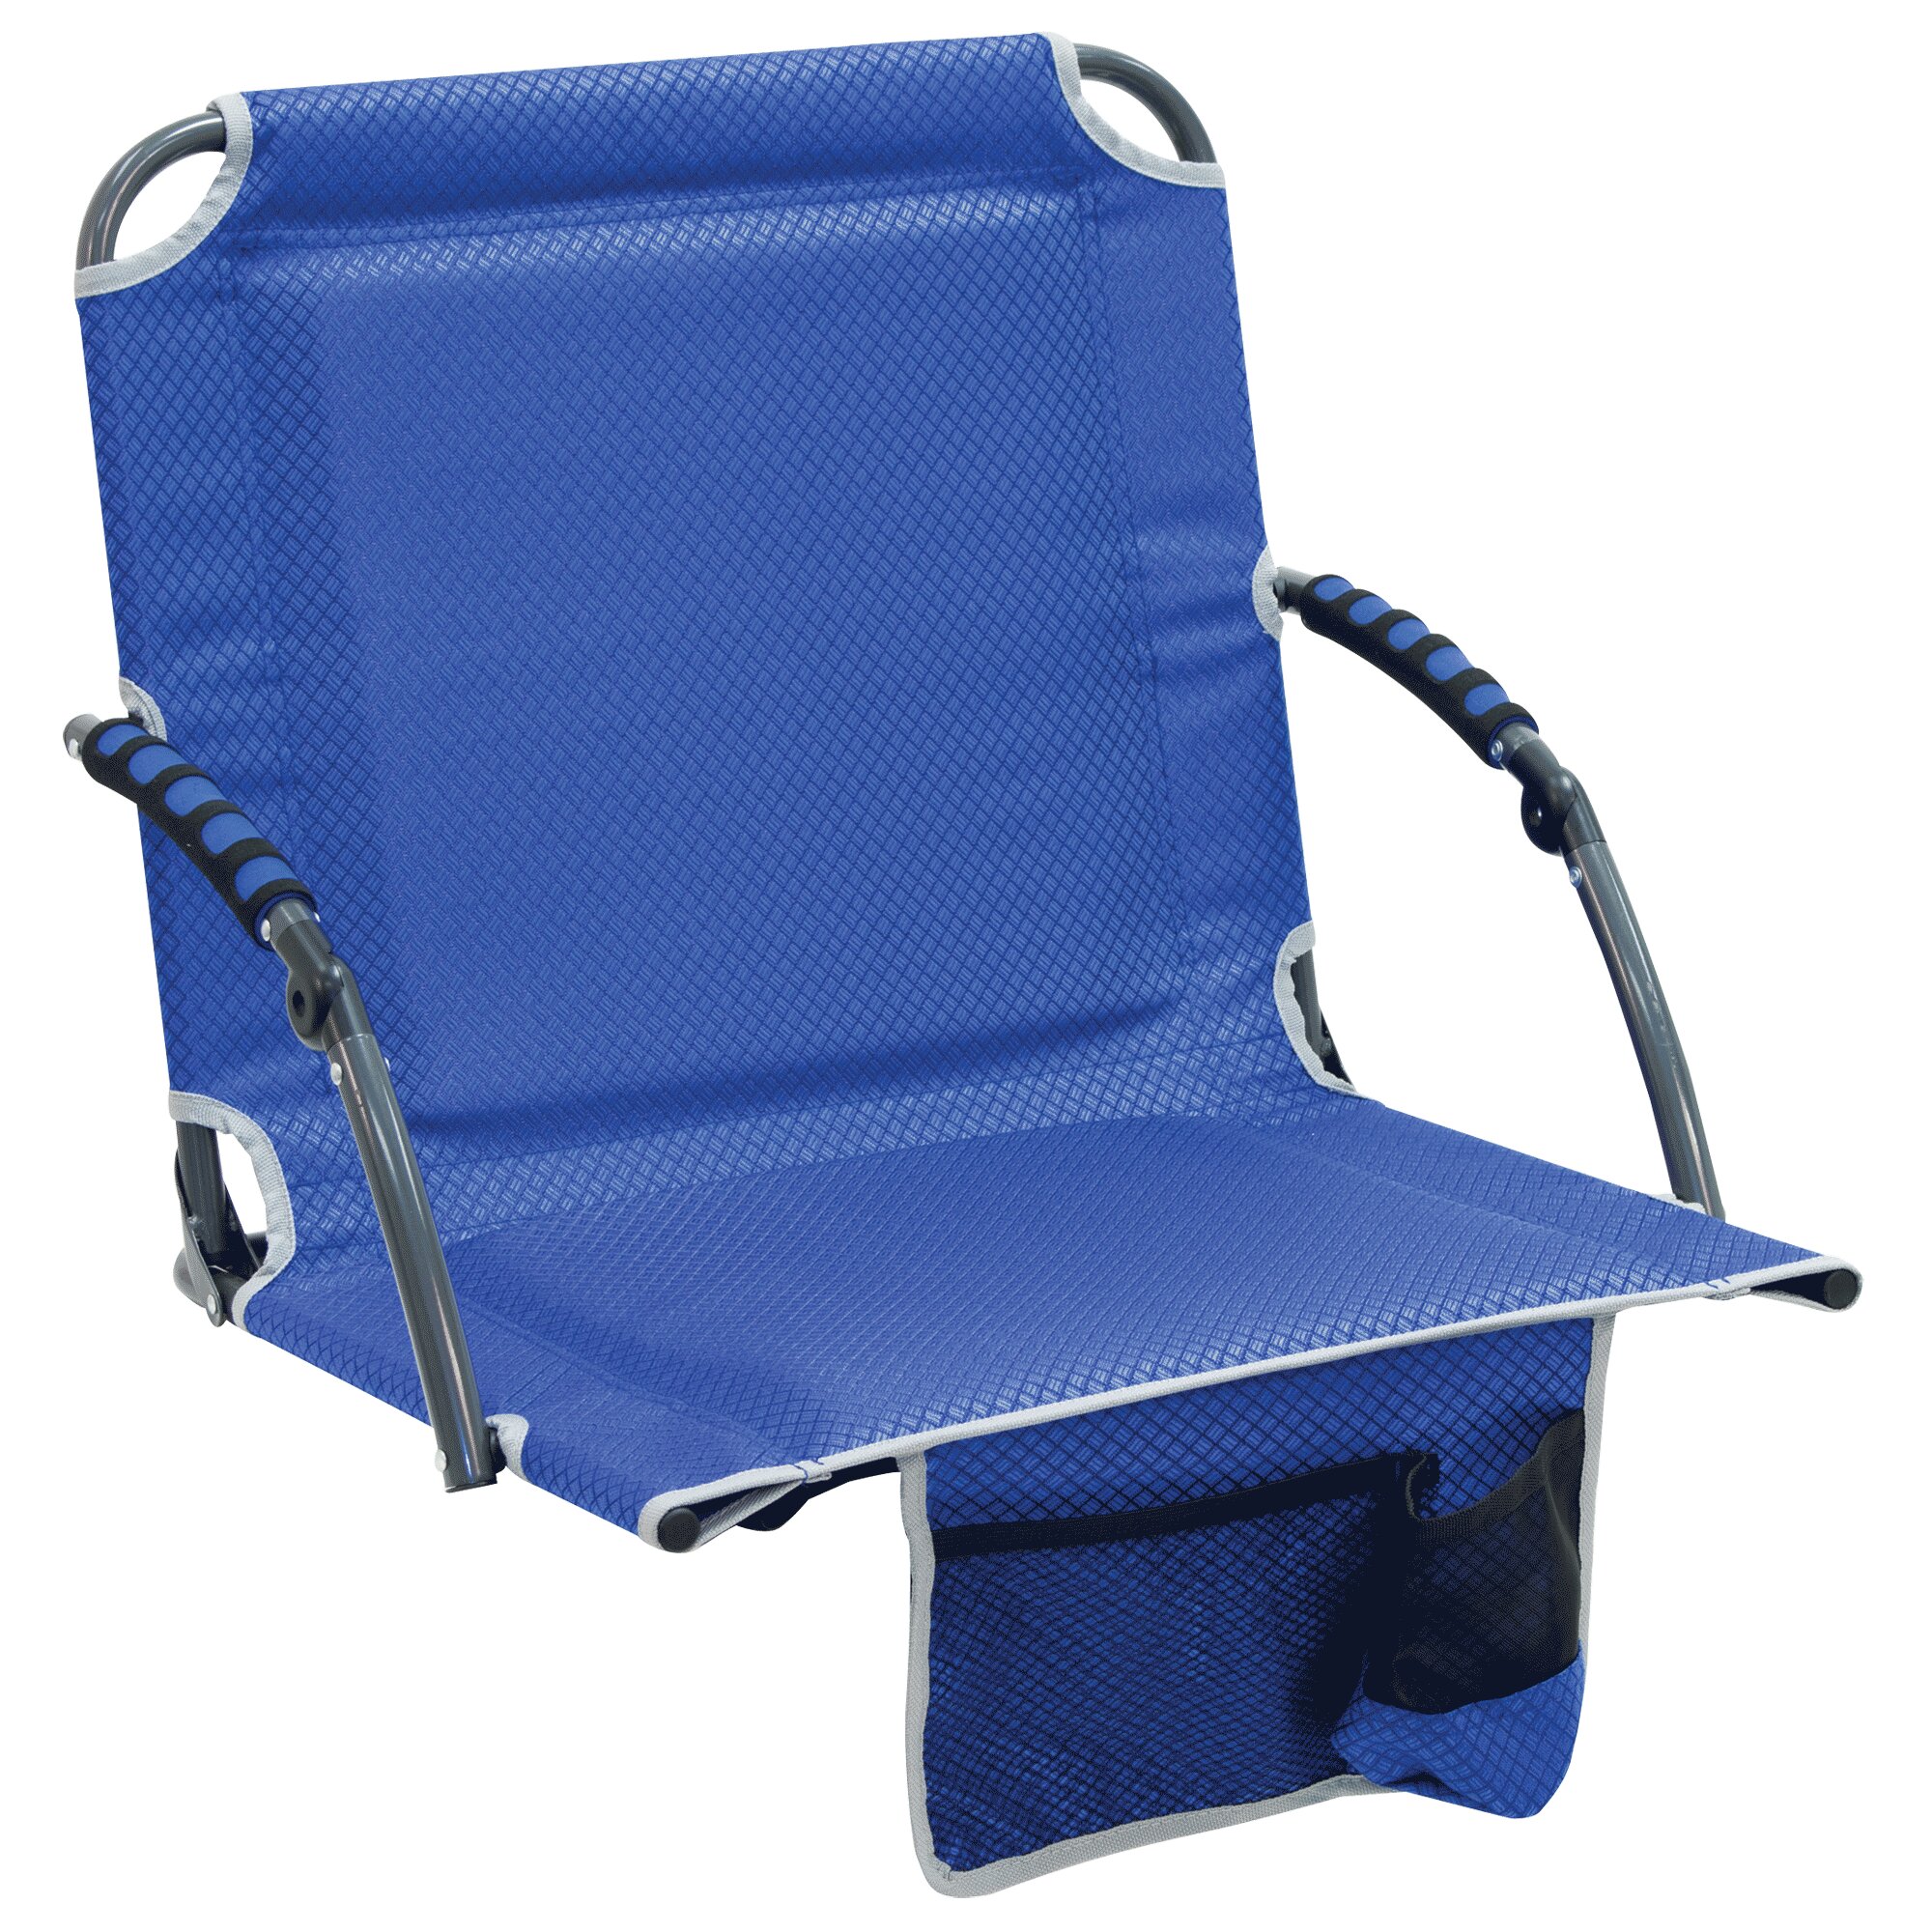 Picnic Seat Moistureproof Cushion Chair Outdoor Seat for Beach for Outdoor Stadium Seat Chair Stadium Seat 